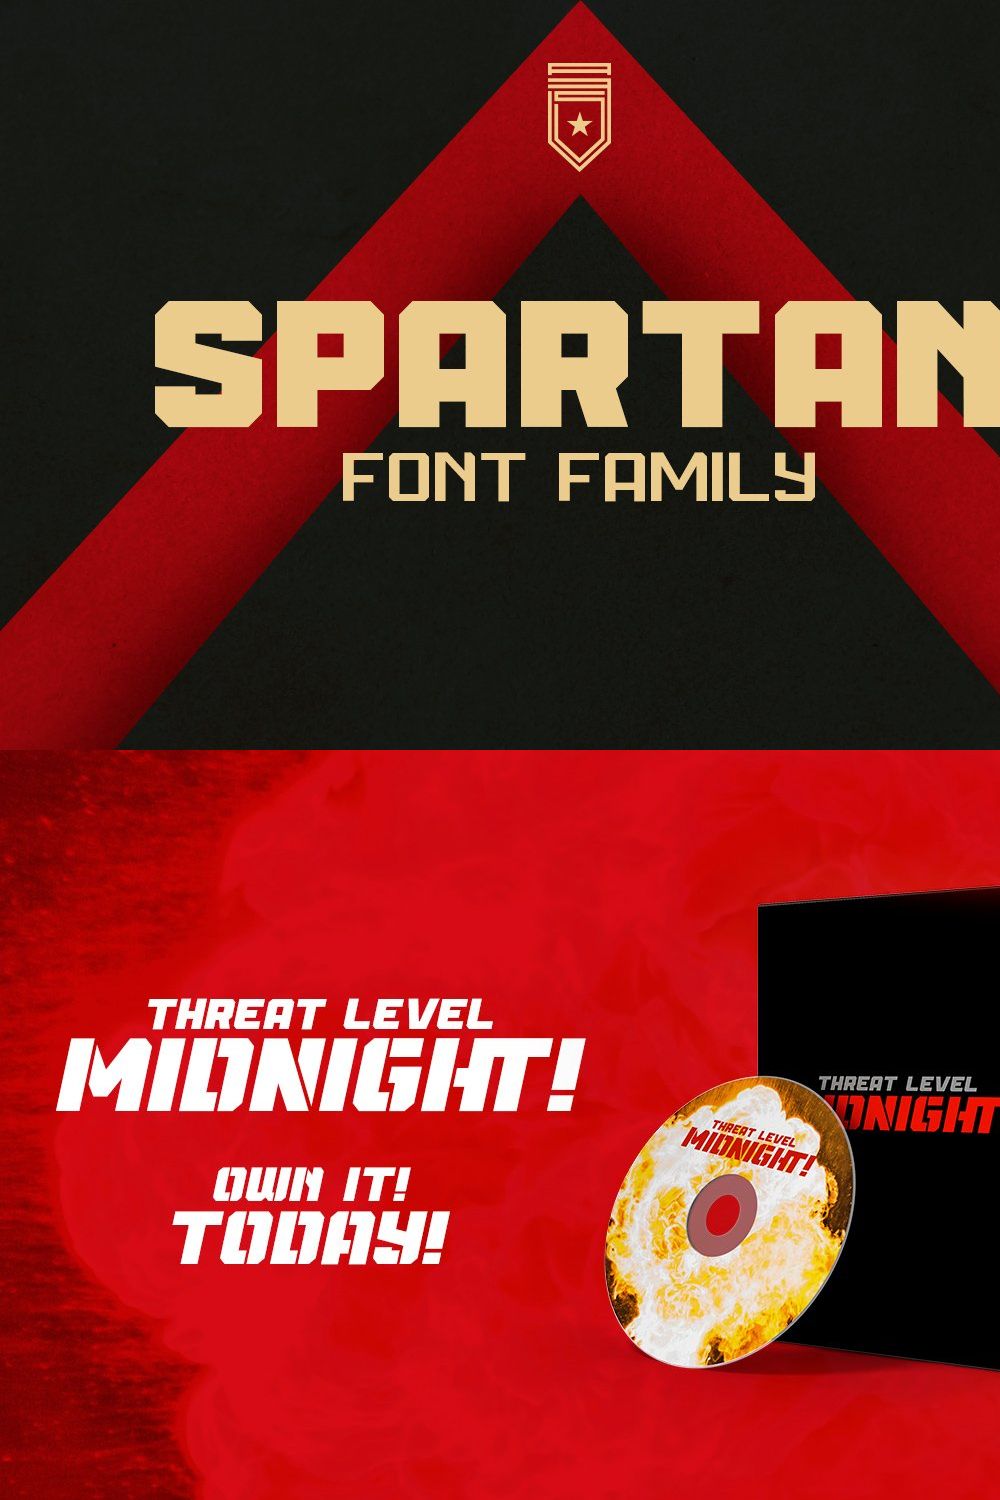 Spartan Font Family pinterest preview image.